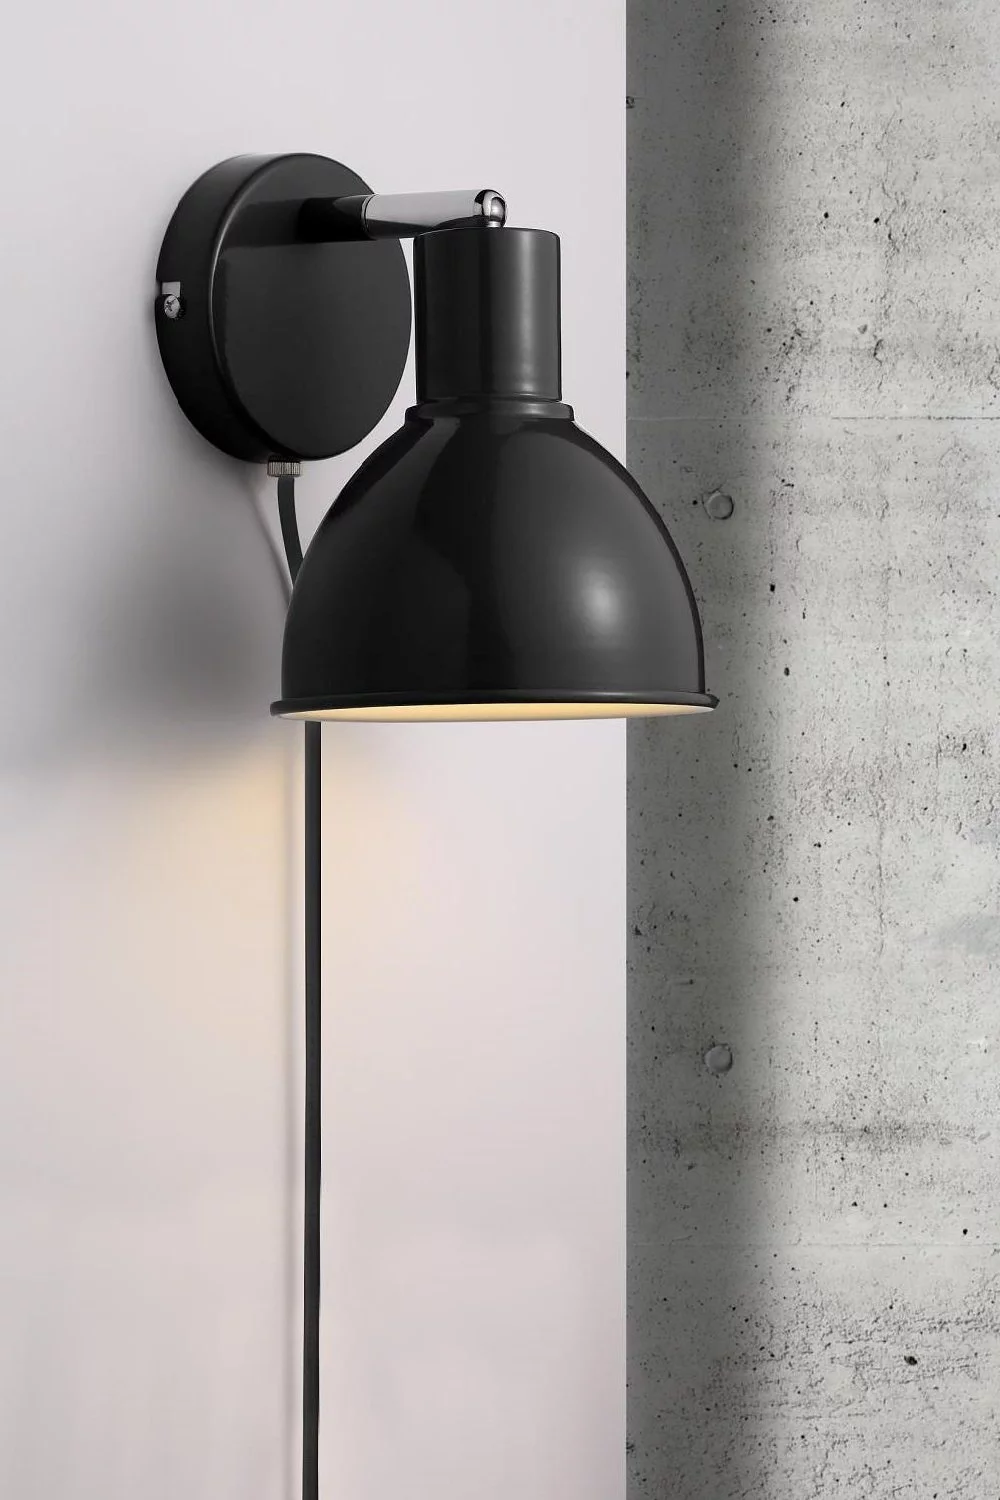   
                        
                        Бра NORDLUX (Дания) 20267    
                         в стиле Лофт.  
                        Тип источника света: светодиодная лампа, сменная.                                                 Цвета плафонов и подвесок: Черный.                         Материал: Металл.                          фото 2